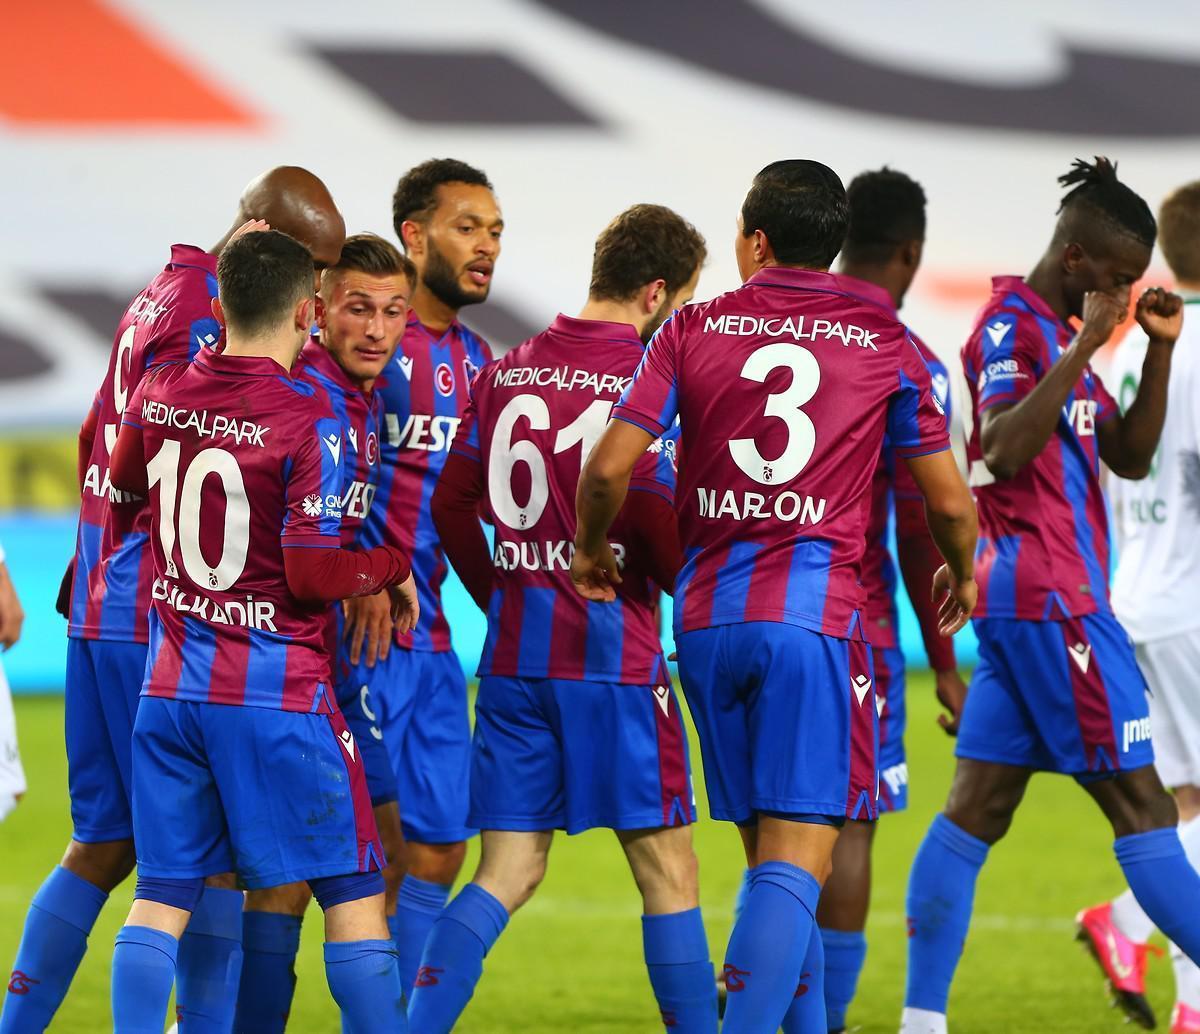 (ÖZET) Trabzonspor - Konyaspor maç sonucu: 3-1